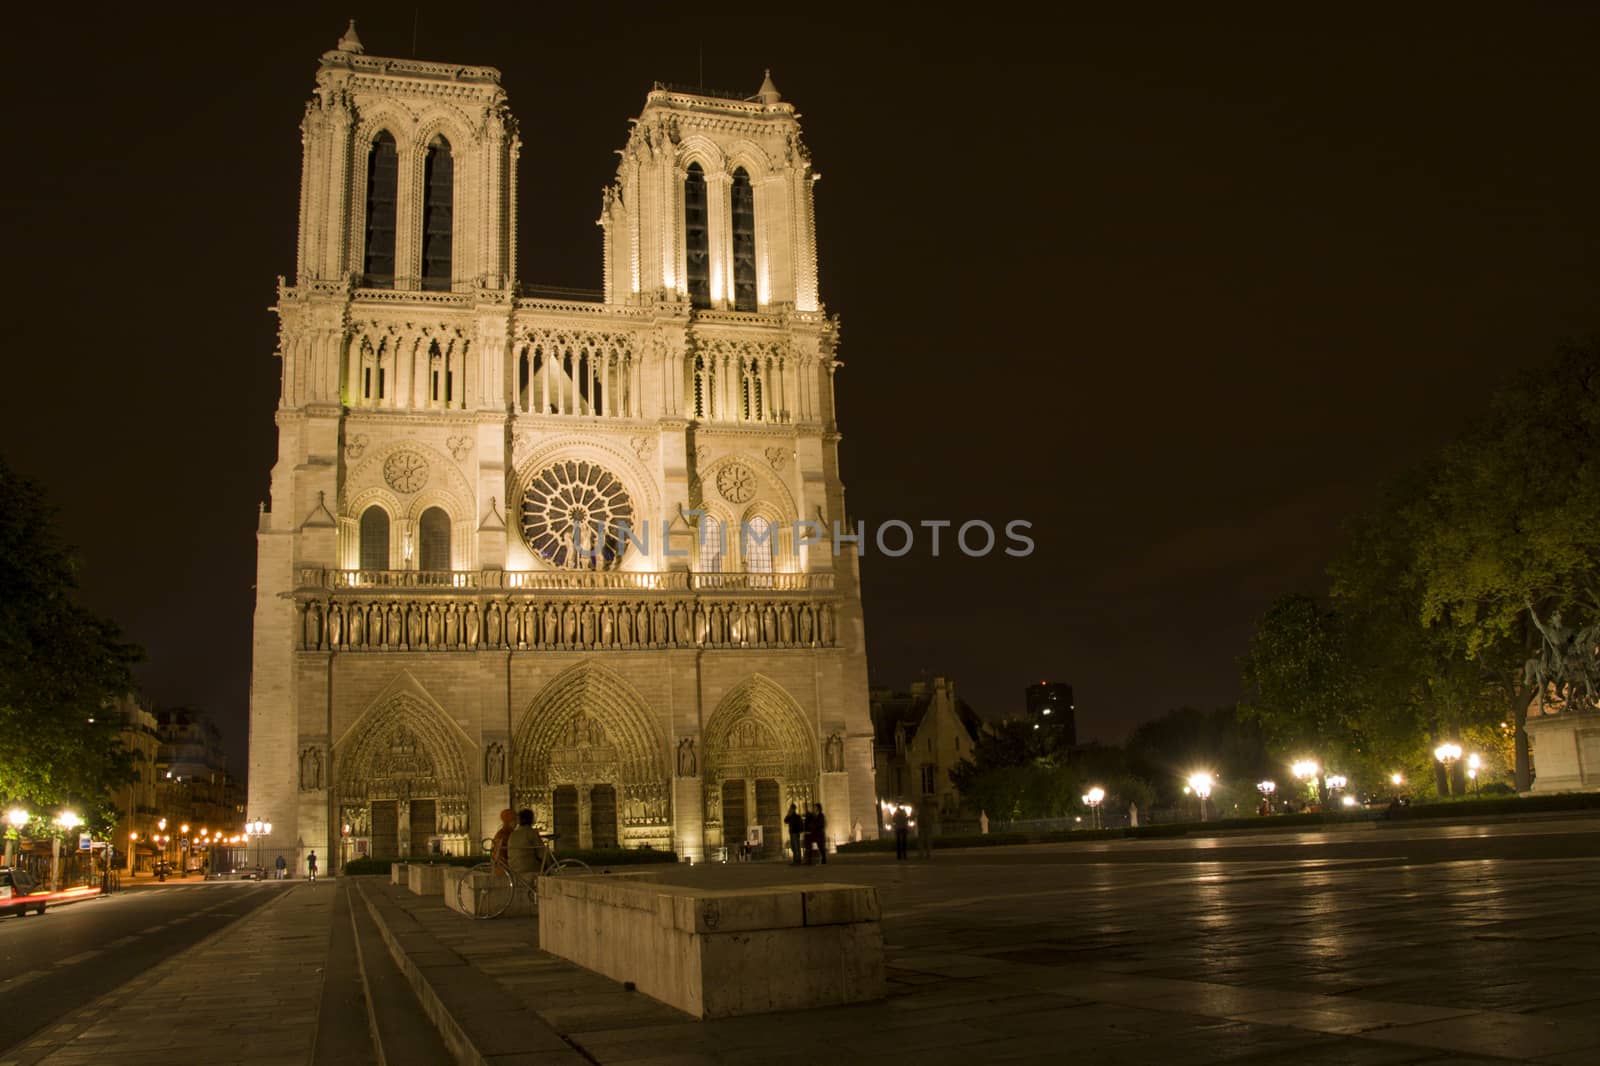 Quiet night scene of Notre Dame cathedral in Paris.